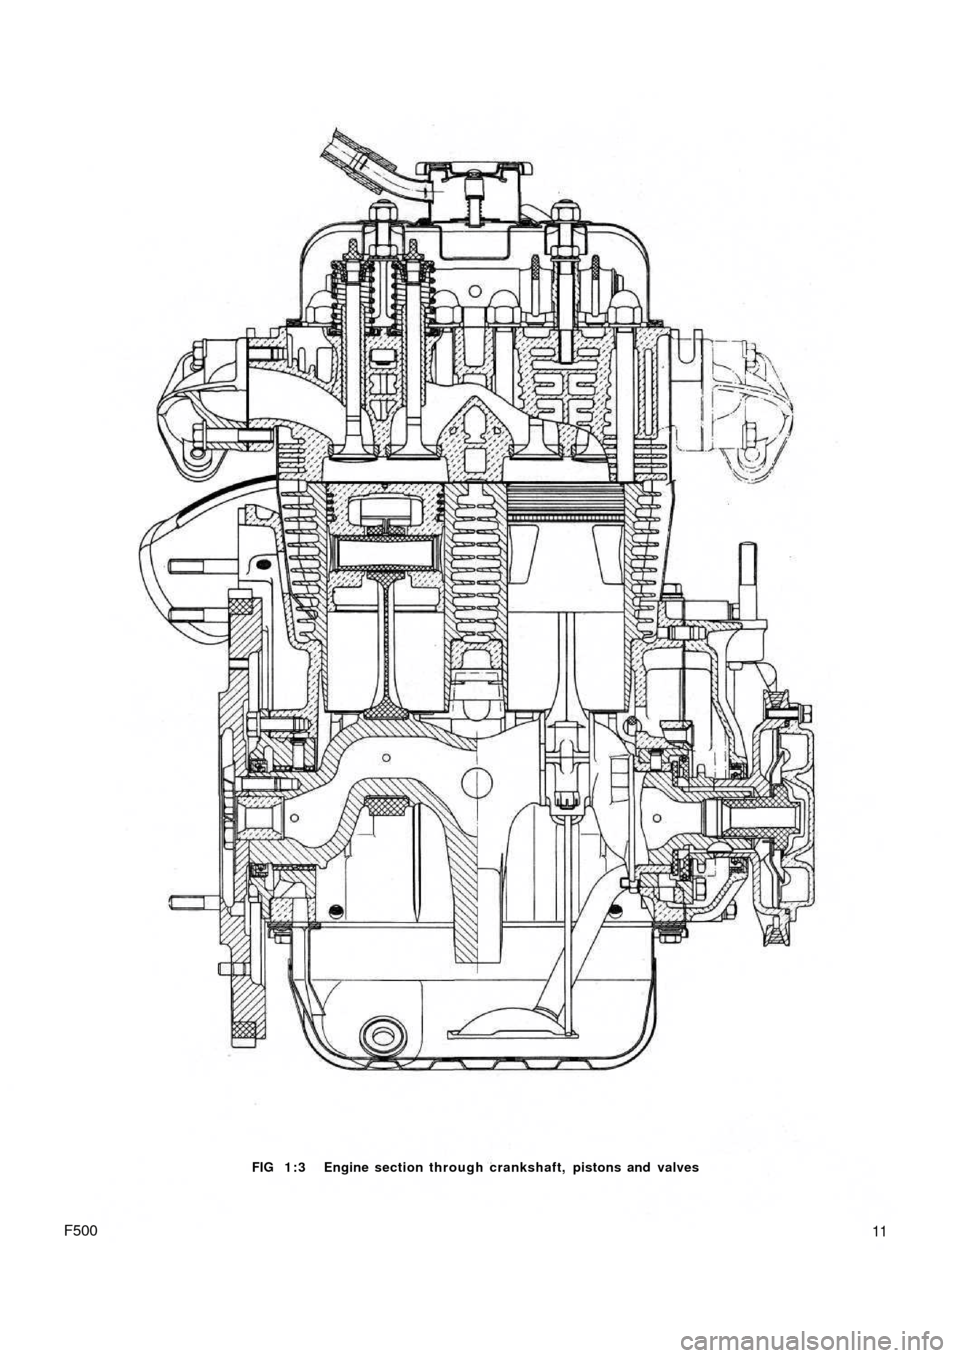 FIAT 500 1958 1.G Workshop Manual FIG 1 : 3  Engine section through crankshaft, pistons and  valves
F50011 